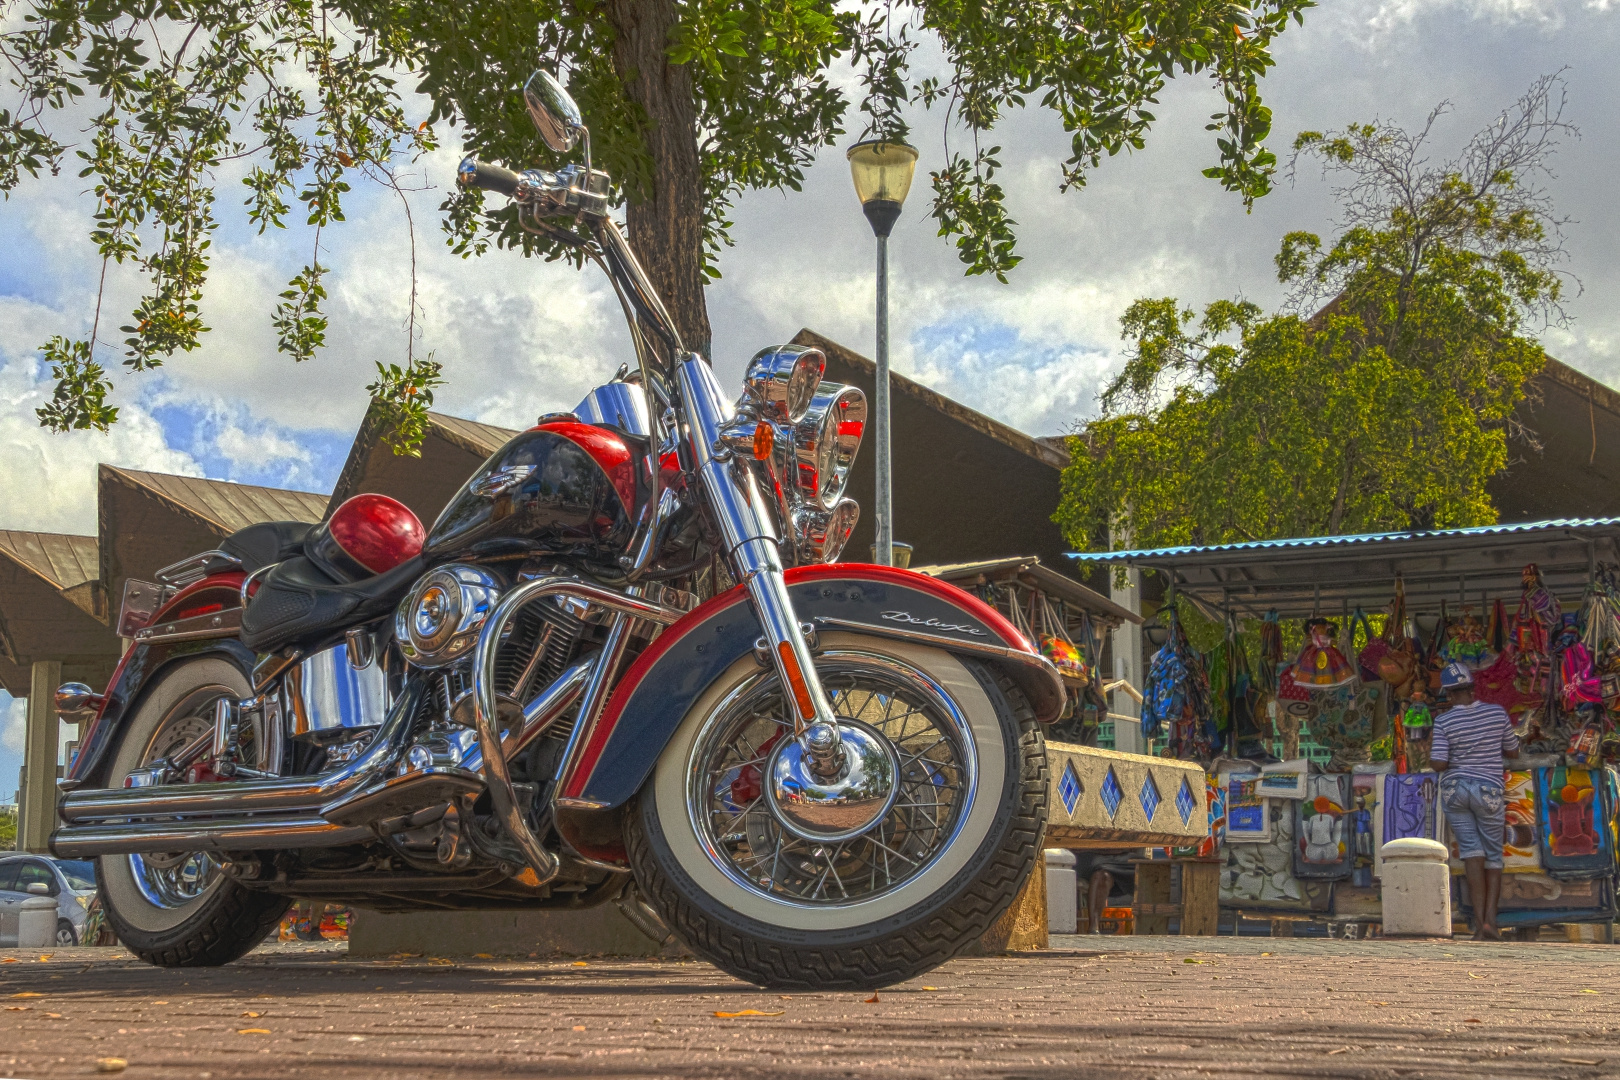 Die sauberste Harley am Markt! ;-)